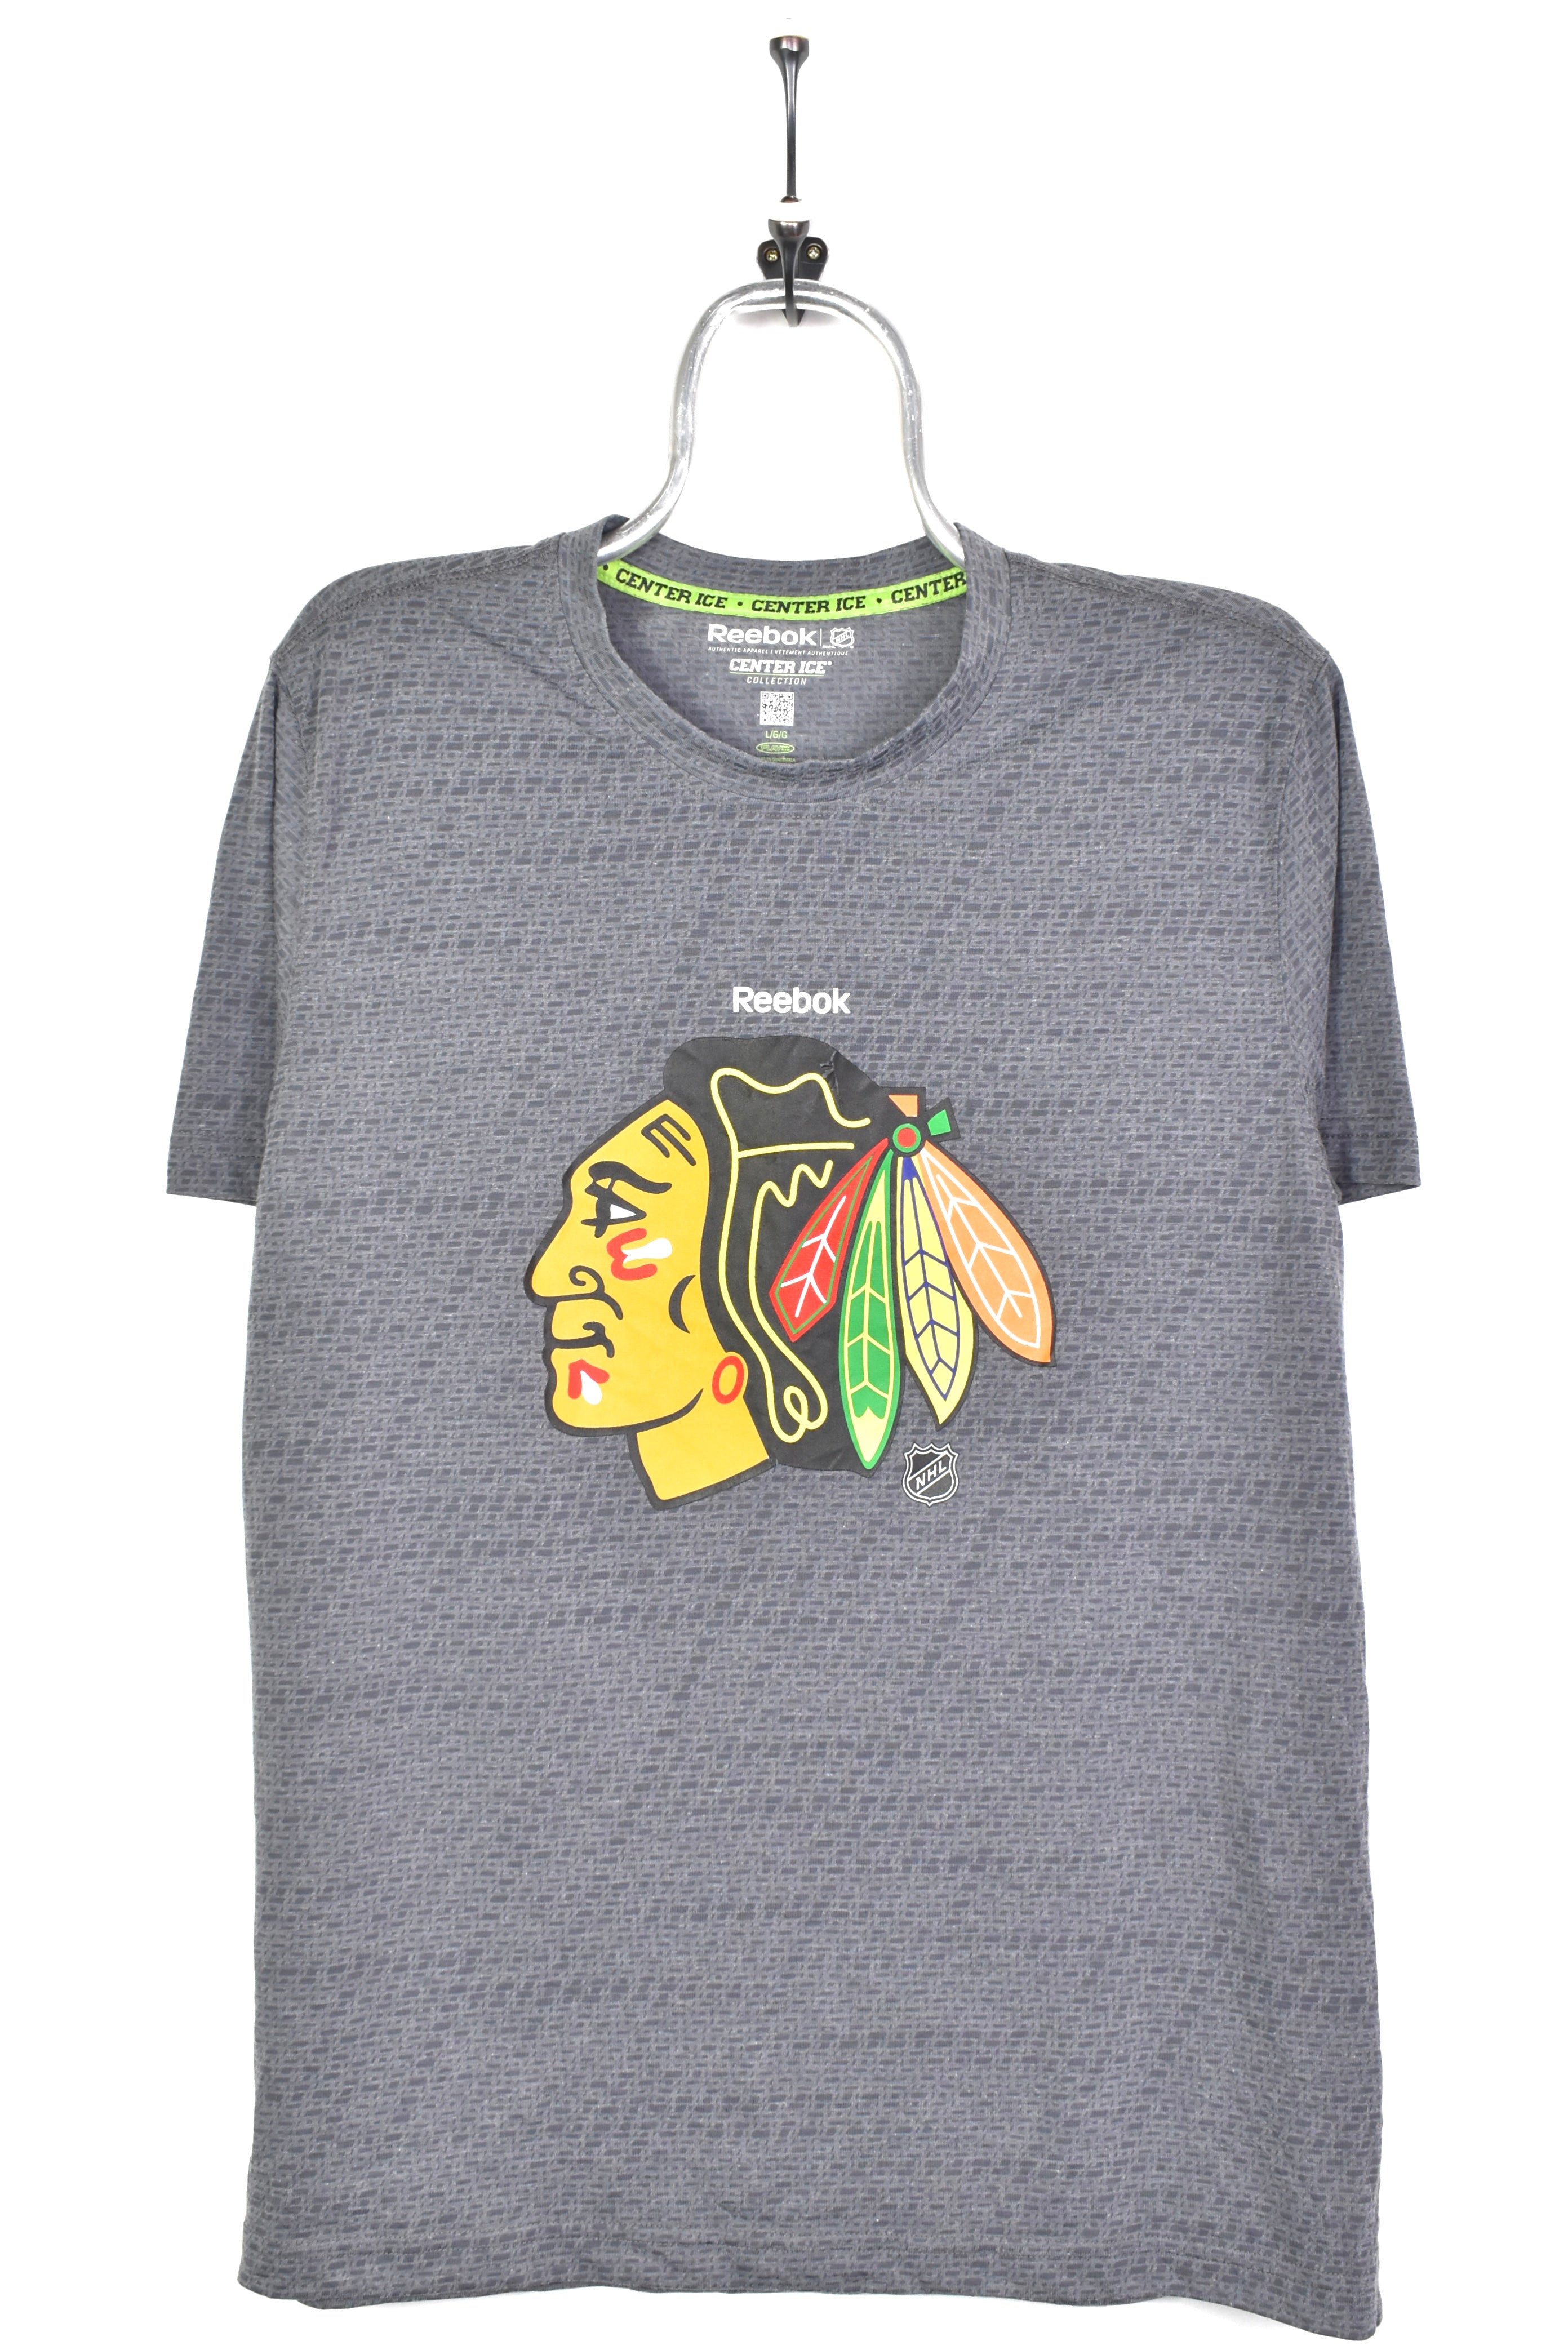 Modern Chicago Blackhawks shirt, NHL ice hockey tee | Medium, grey PRO SPORT